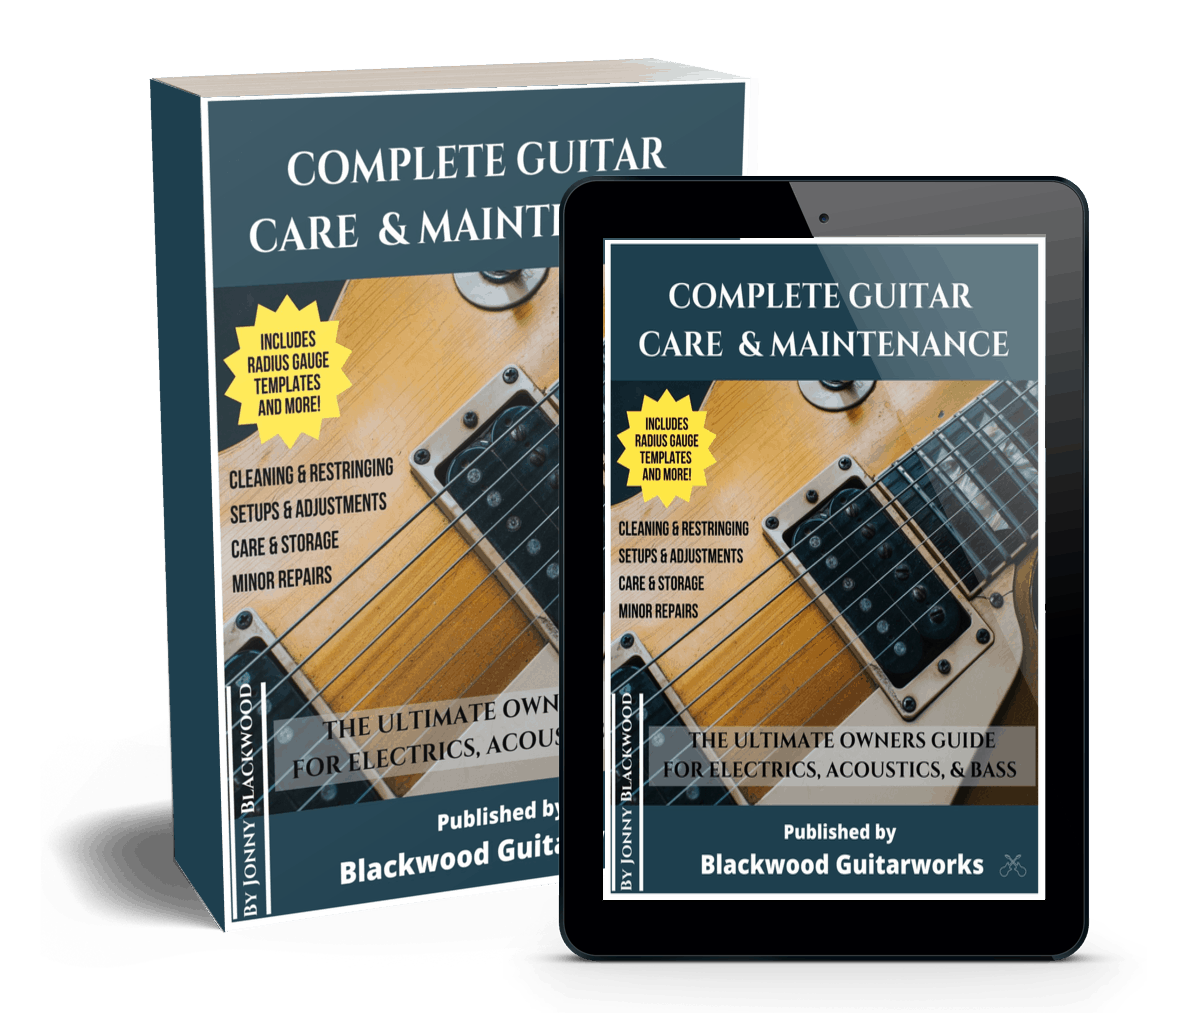 Complete Guitar Care & Maintenance